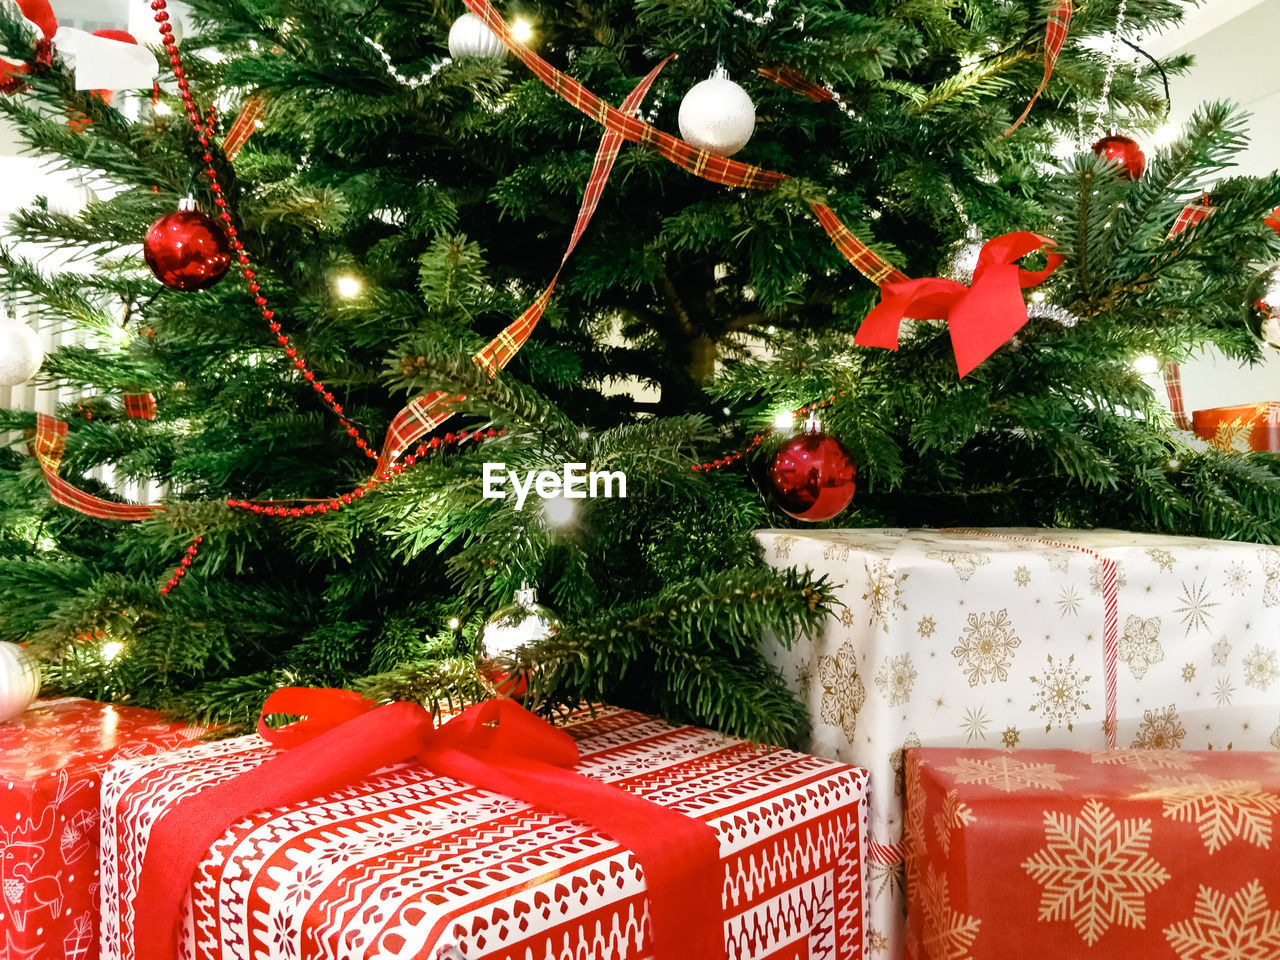 Christmas presents and decoration hanging on christmas tree